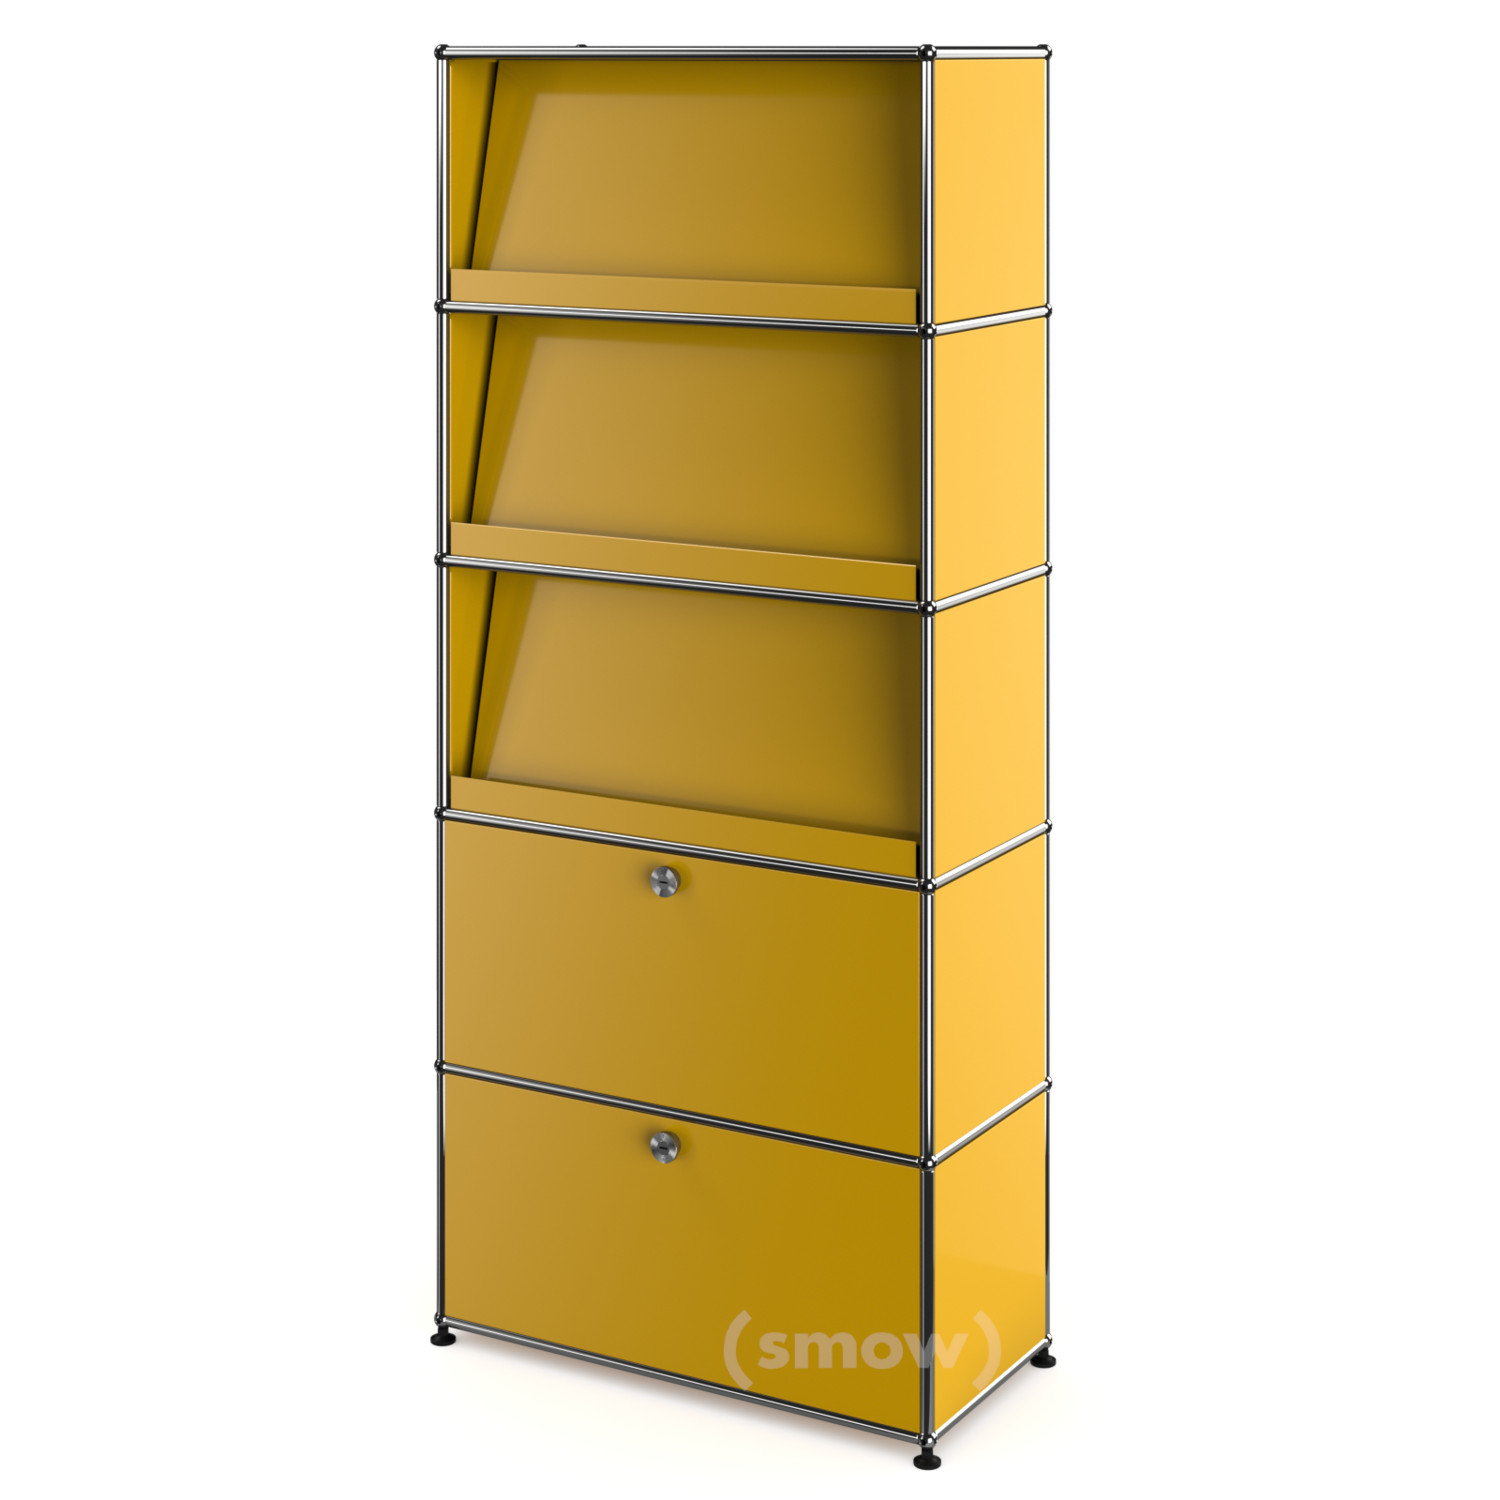 Usm Haller Storage Unit With 3 Angled, Yellow Shelving Unit